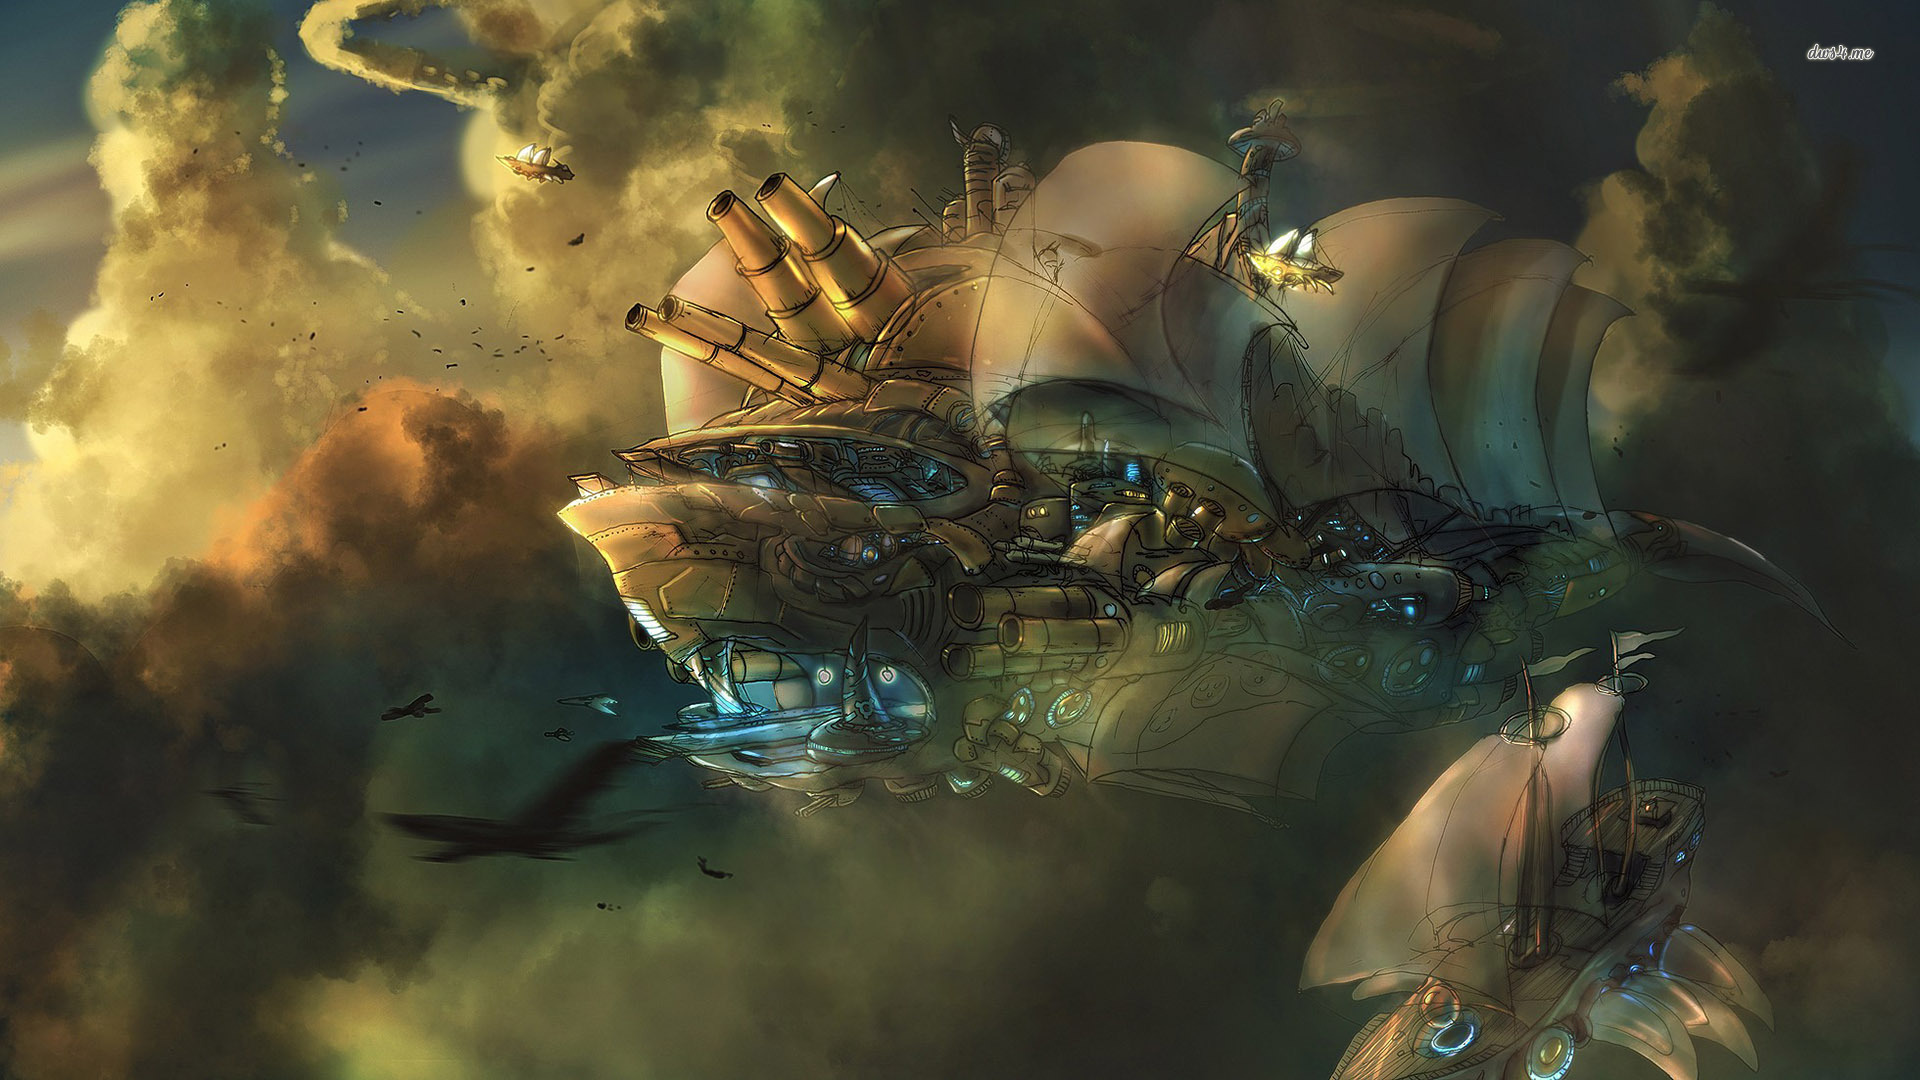 Flying Steampunk Battleship Wallpaper And Image